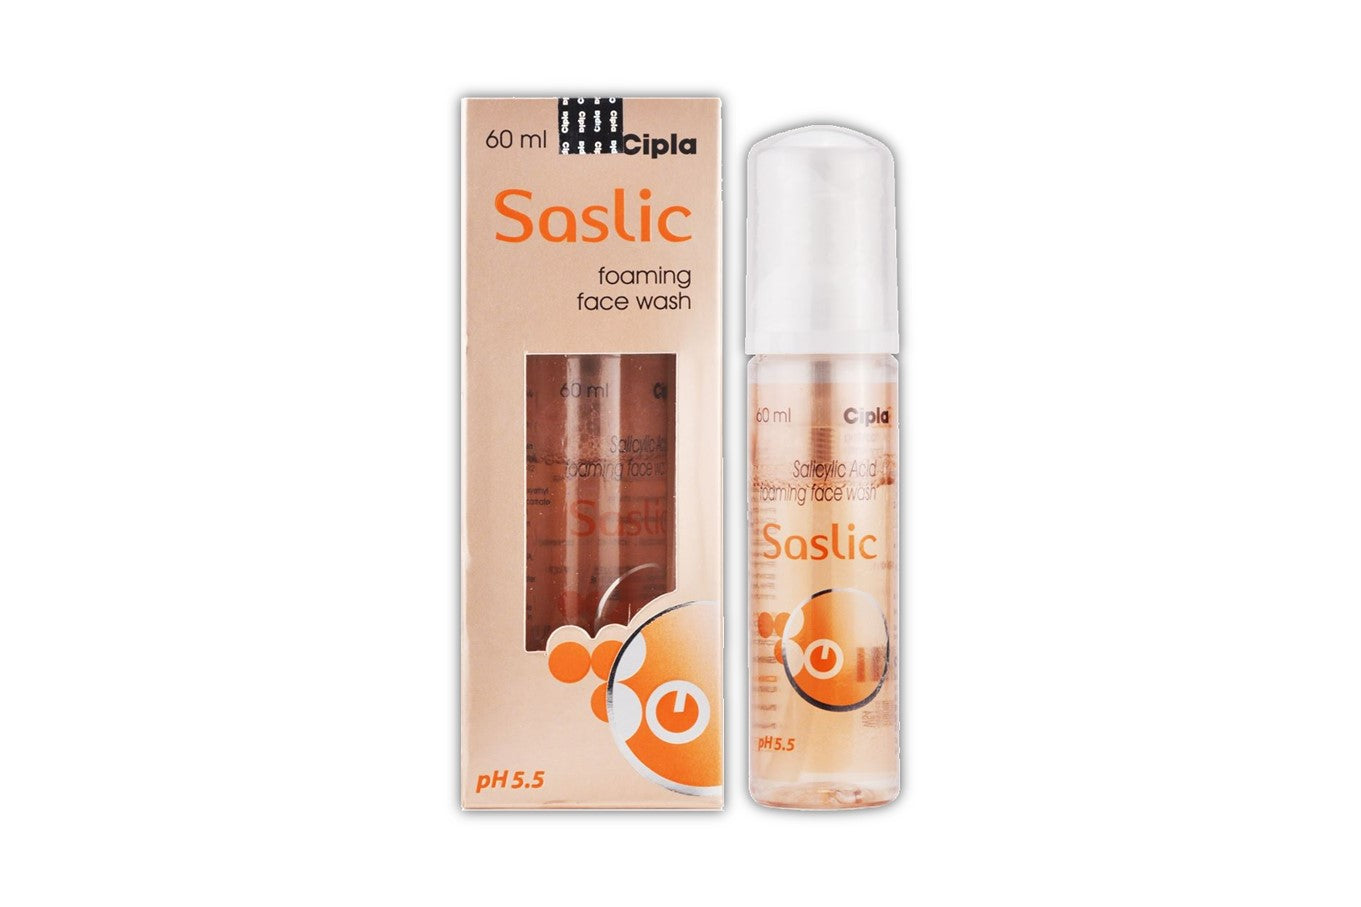 Saslic Foaming Face Wash 60ml (Pack of 2)